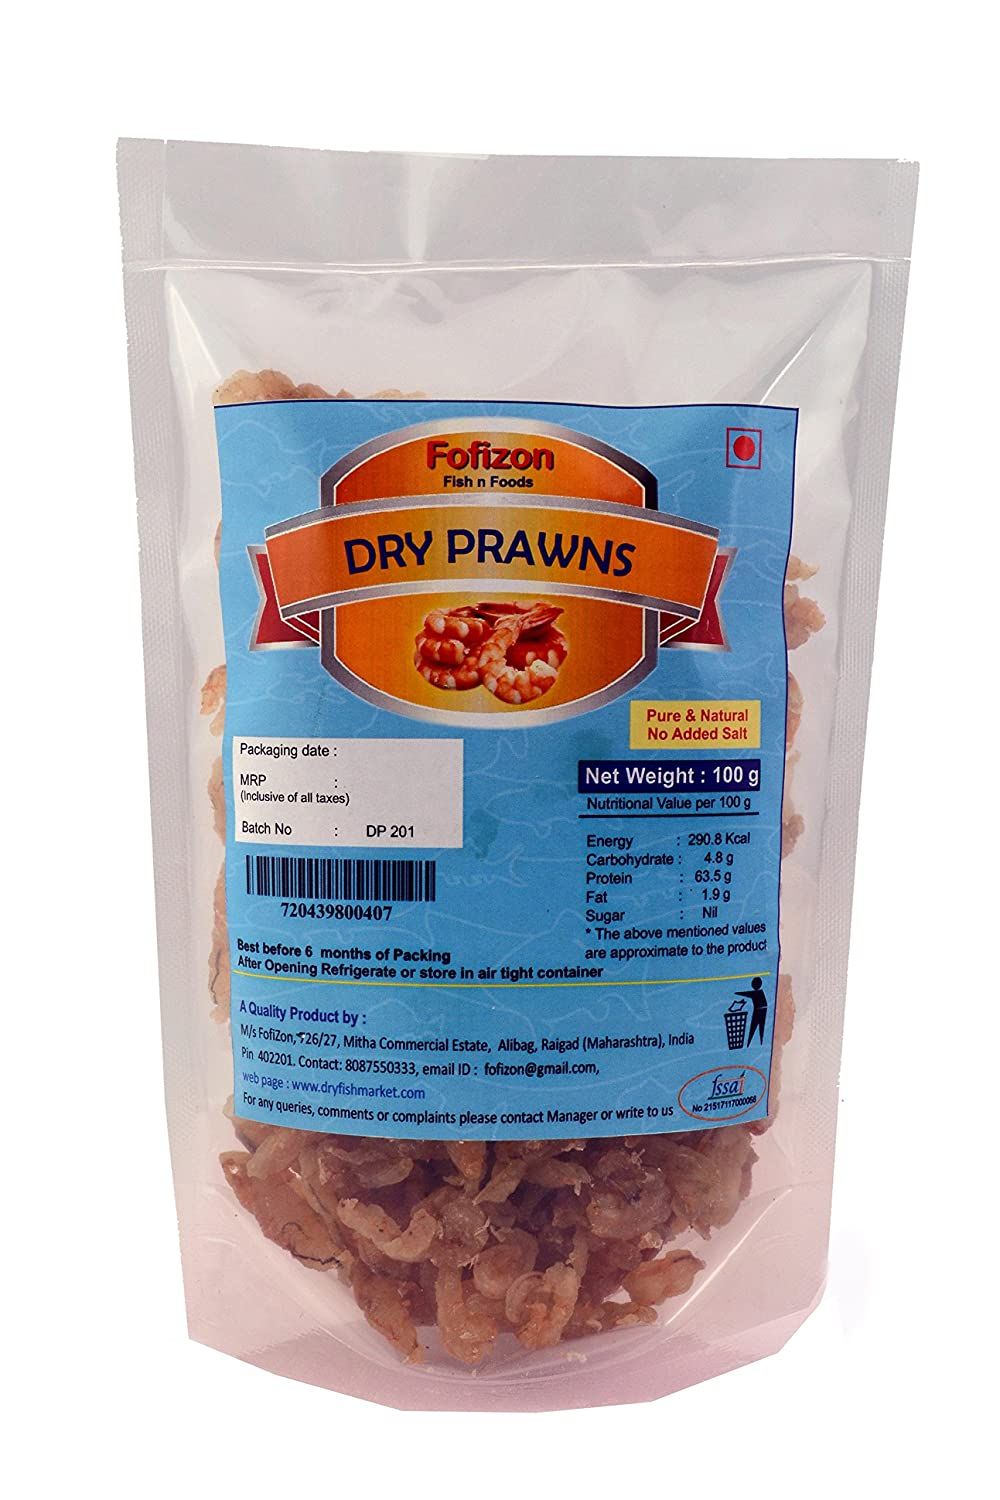 Fofizon Dry Fish Seafood Dry Prawns Image